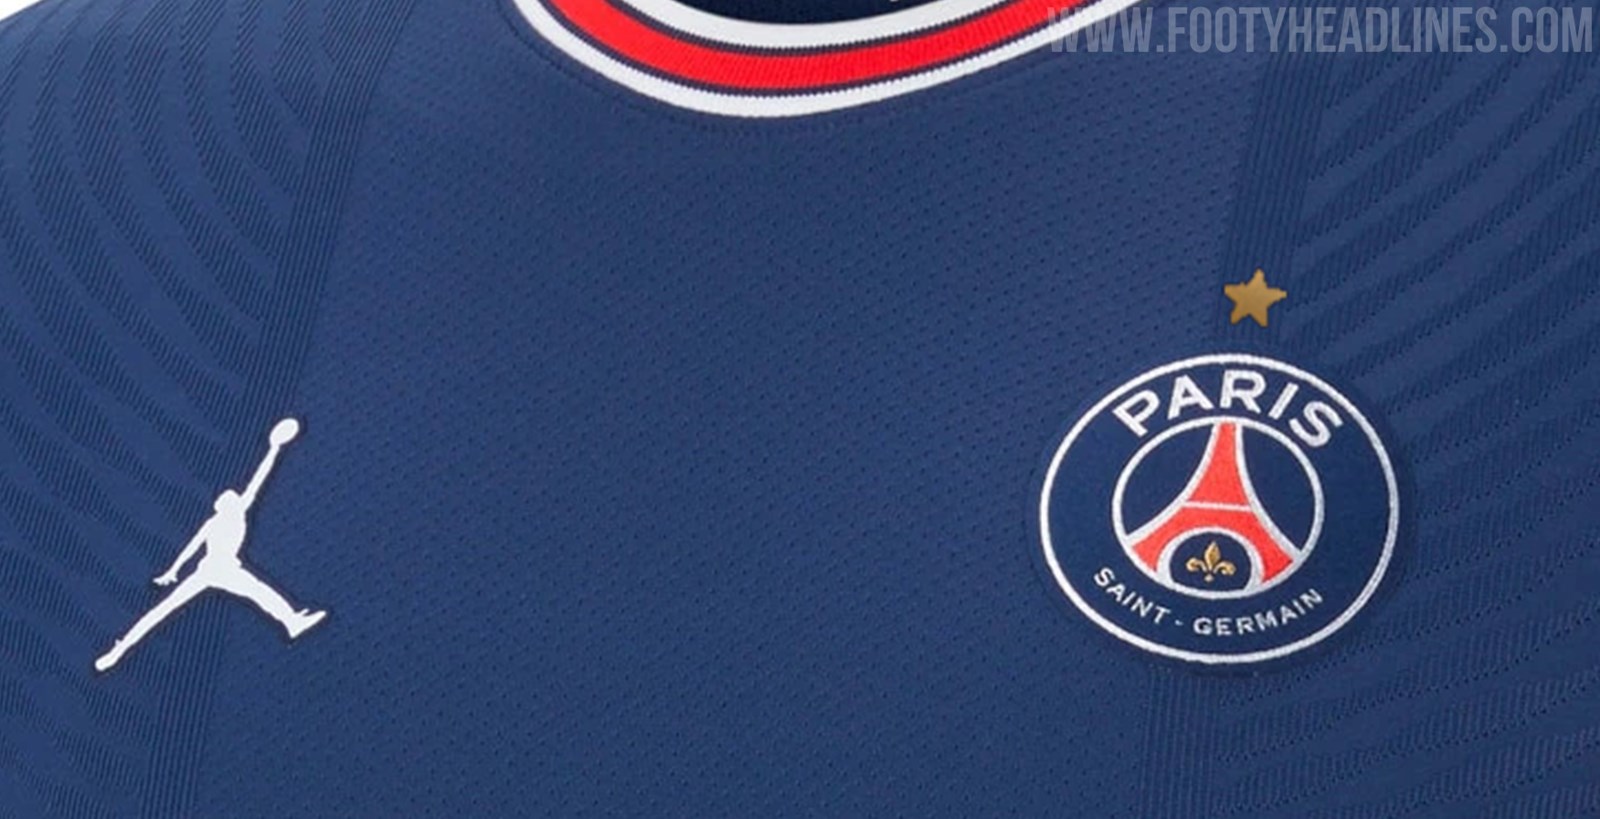 PSG Paris Saint-Germain 2006-07 Away Football Shirt SIZE L